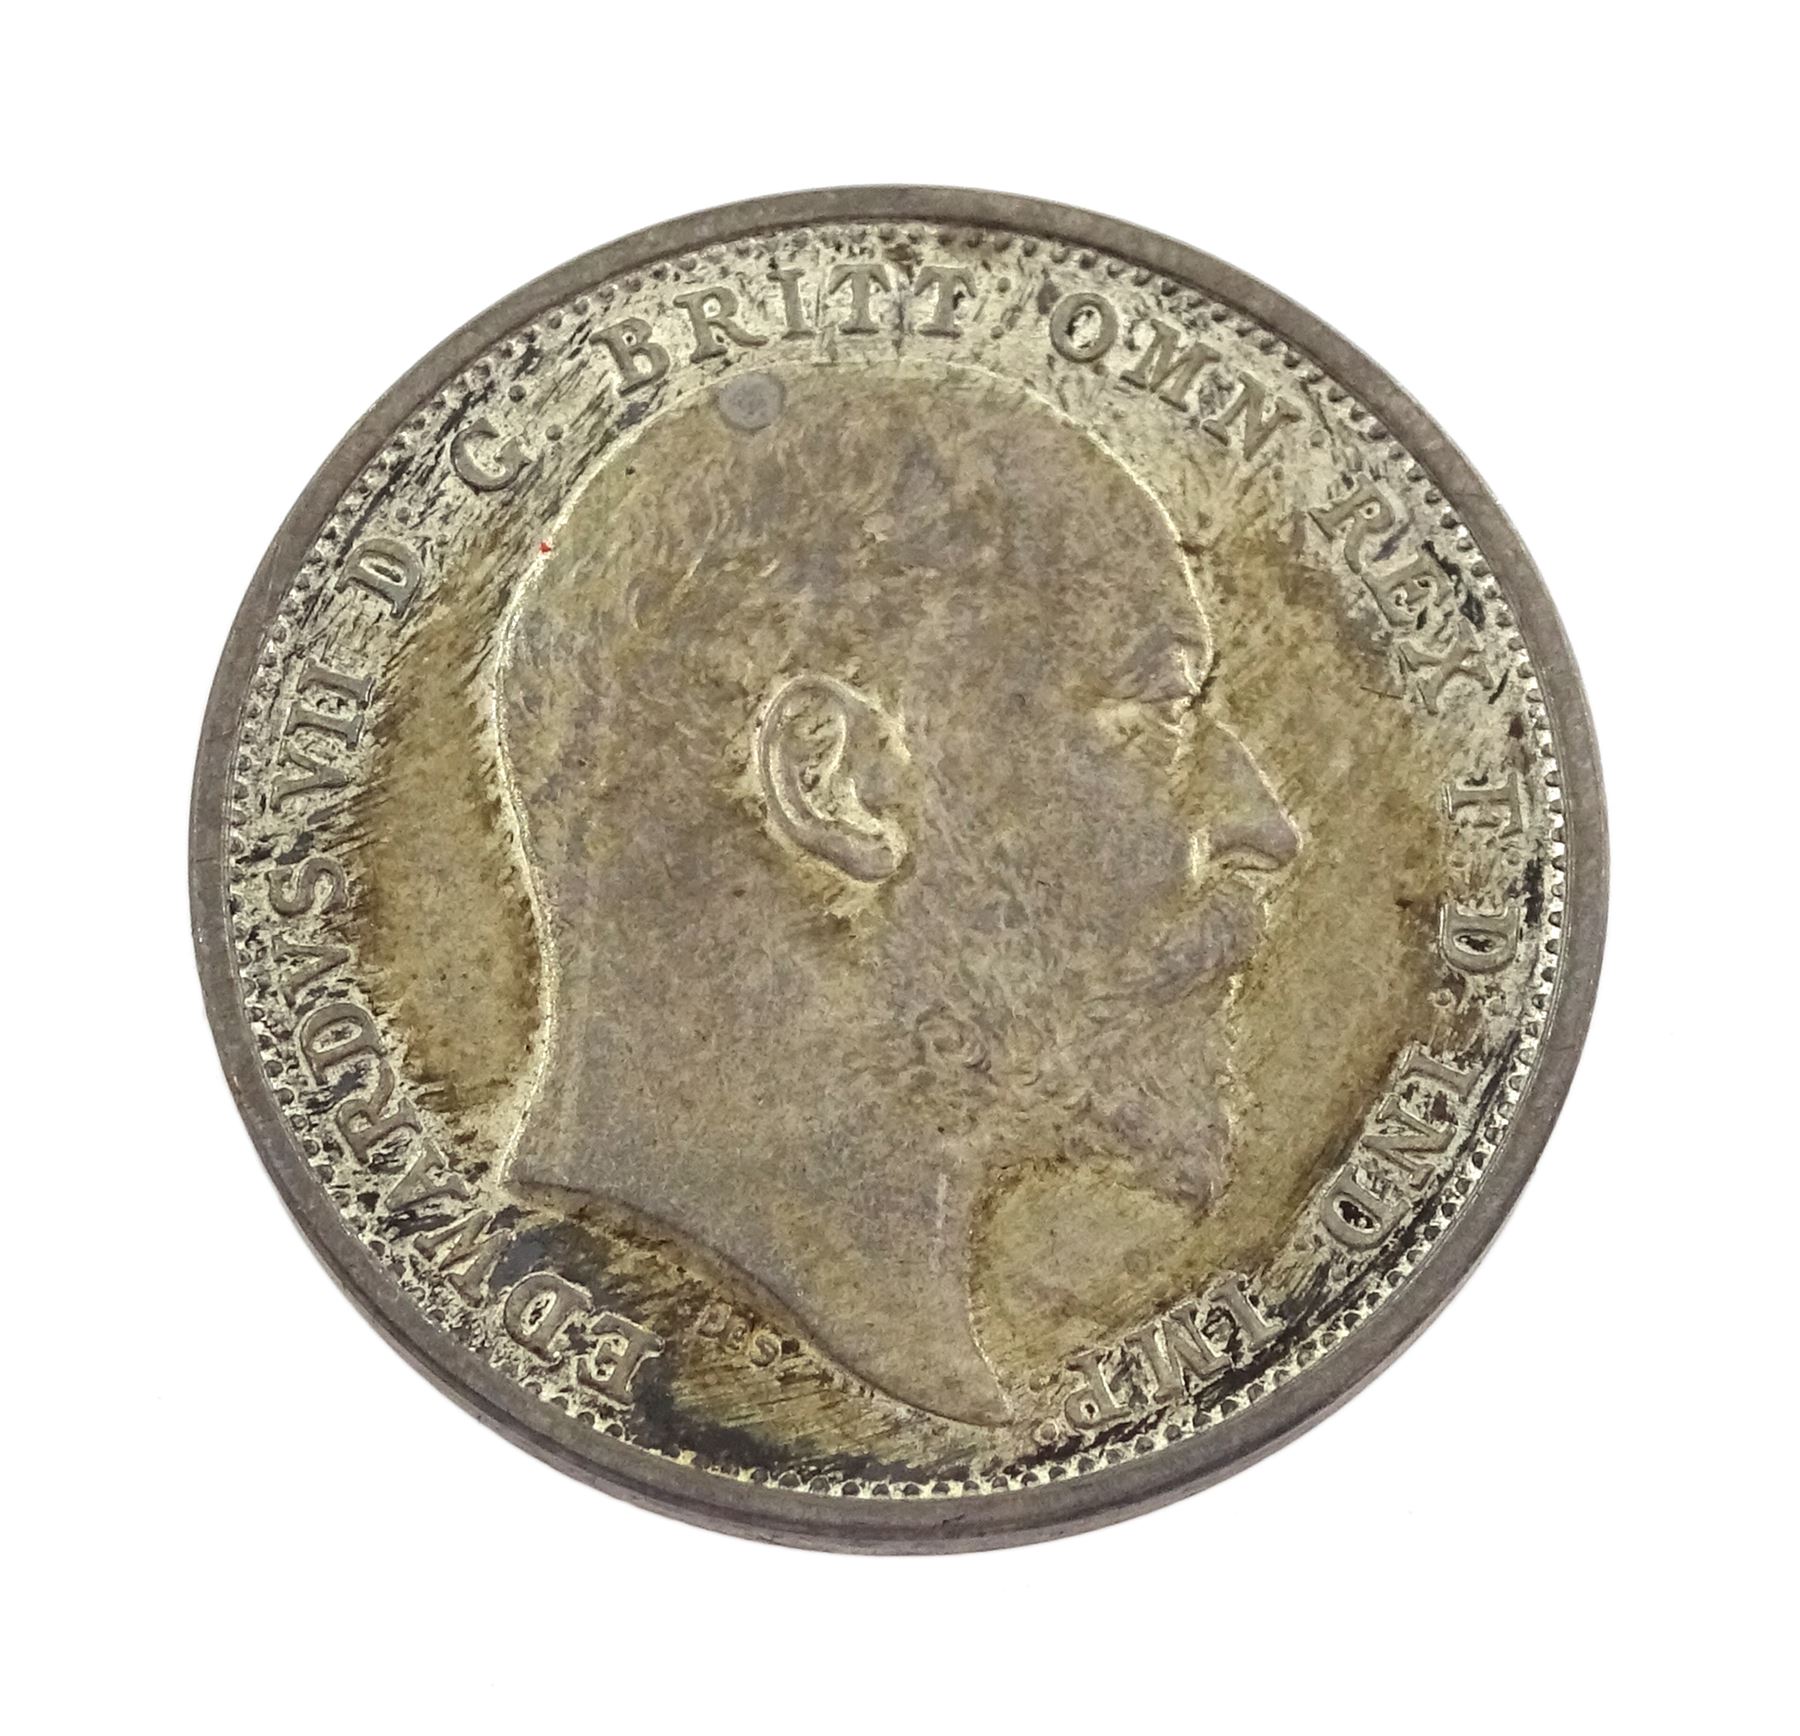 King Edward VII 1902 matt proof short coin set - Image 18 of 26